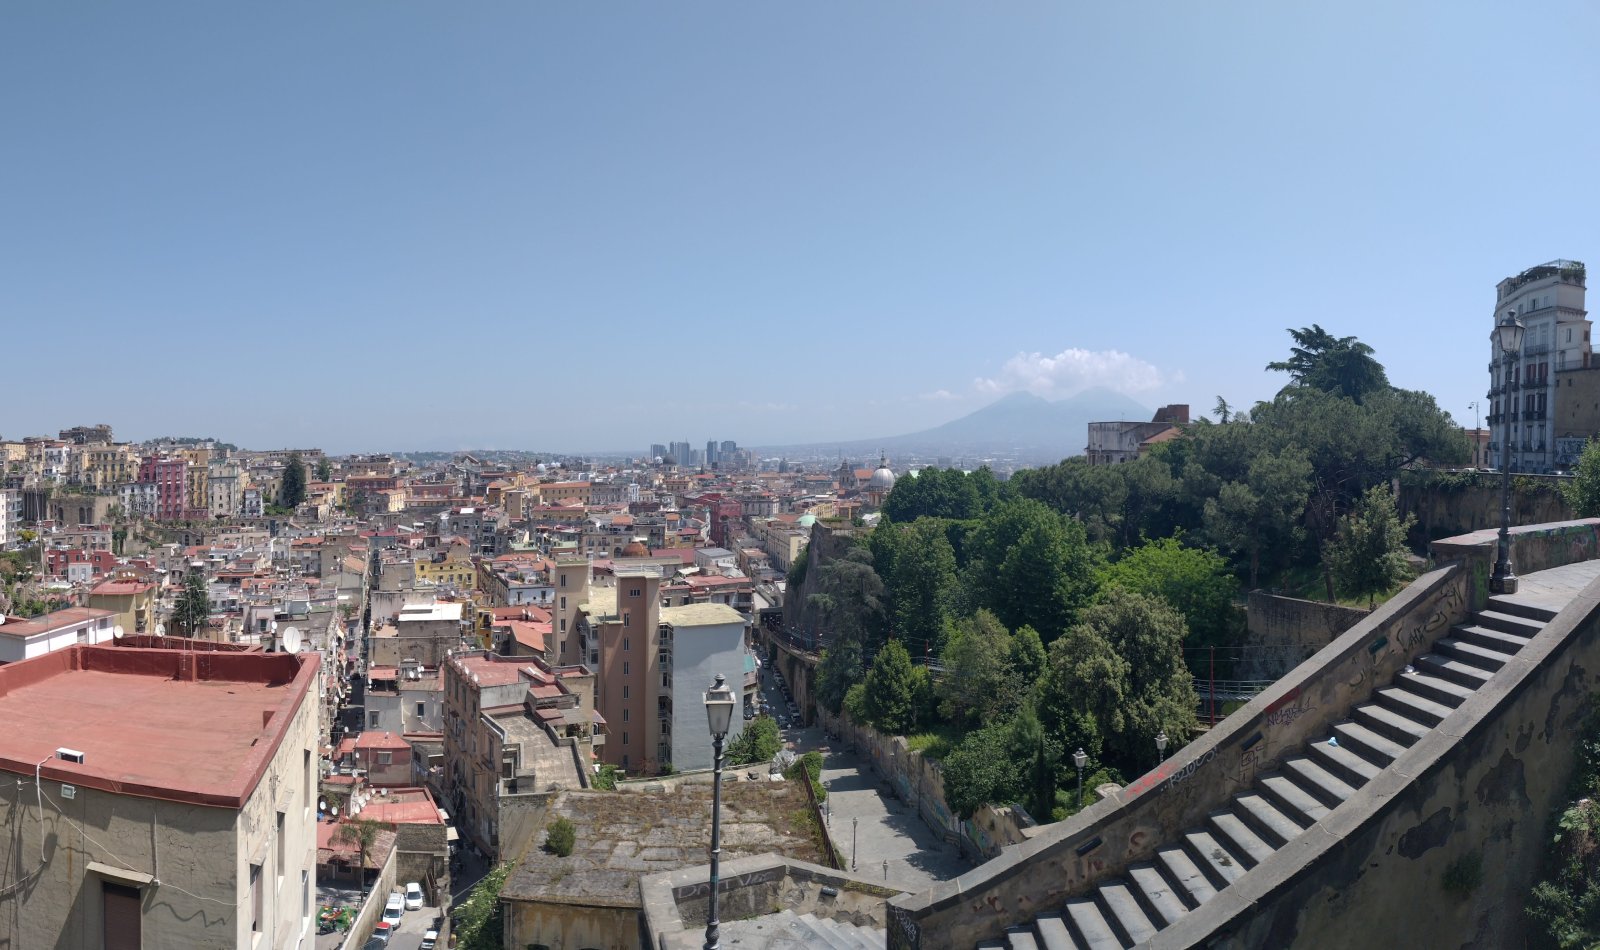 Pedamentina de Nápoles vista desde arriba